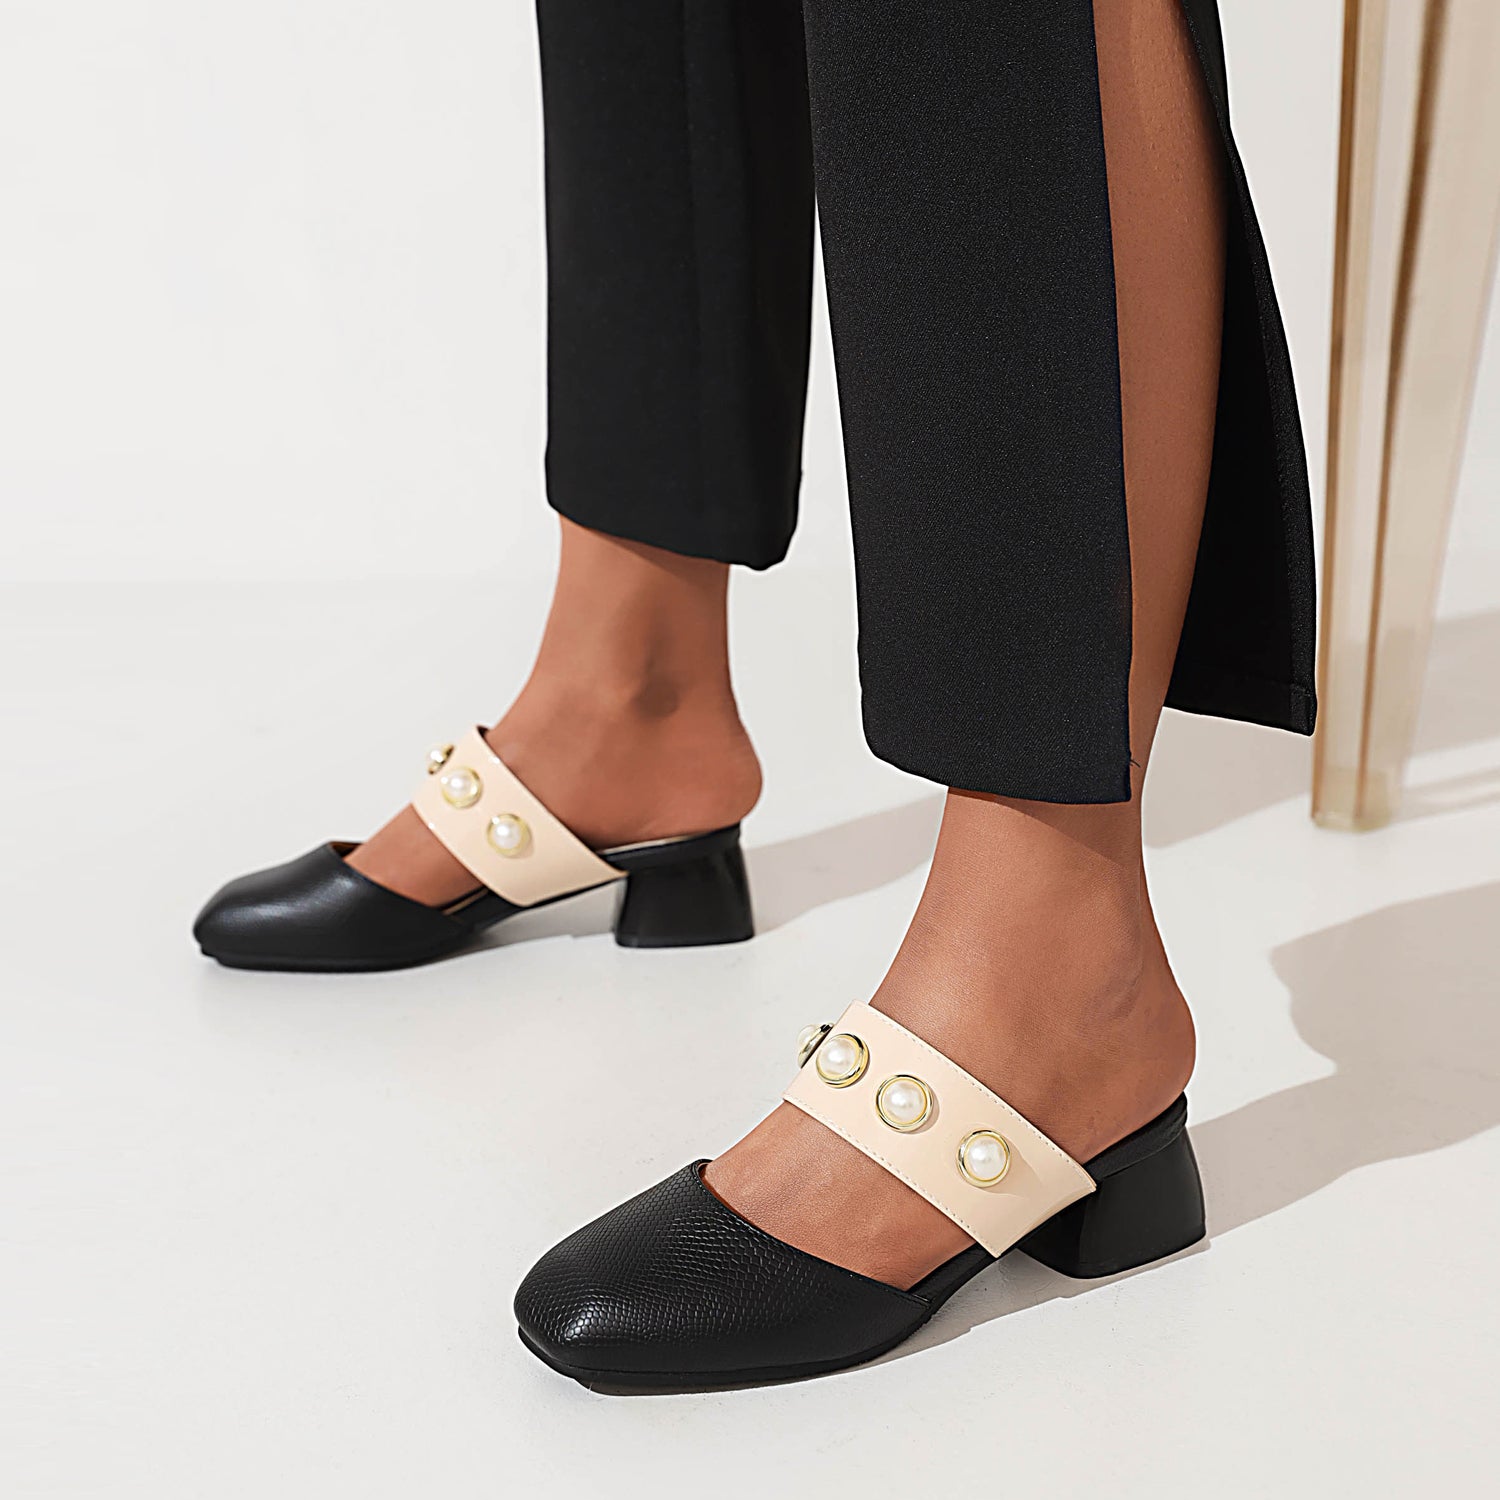 Bigsizeheels Houndstooth Pearl Round Toe Flats Sandals - Black best oversized womens heels are from bigsizeheels®